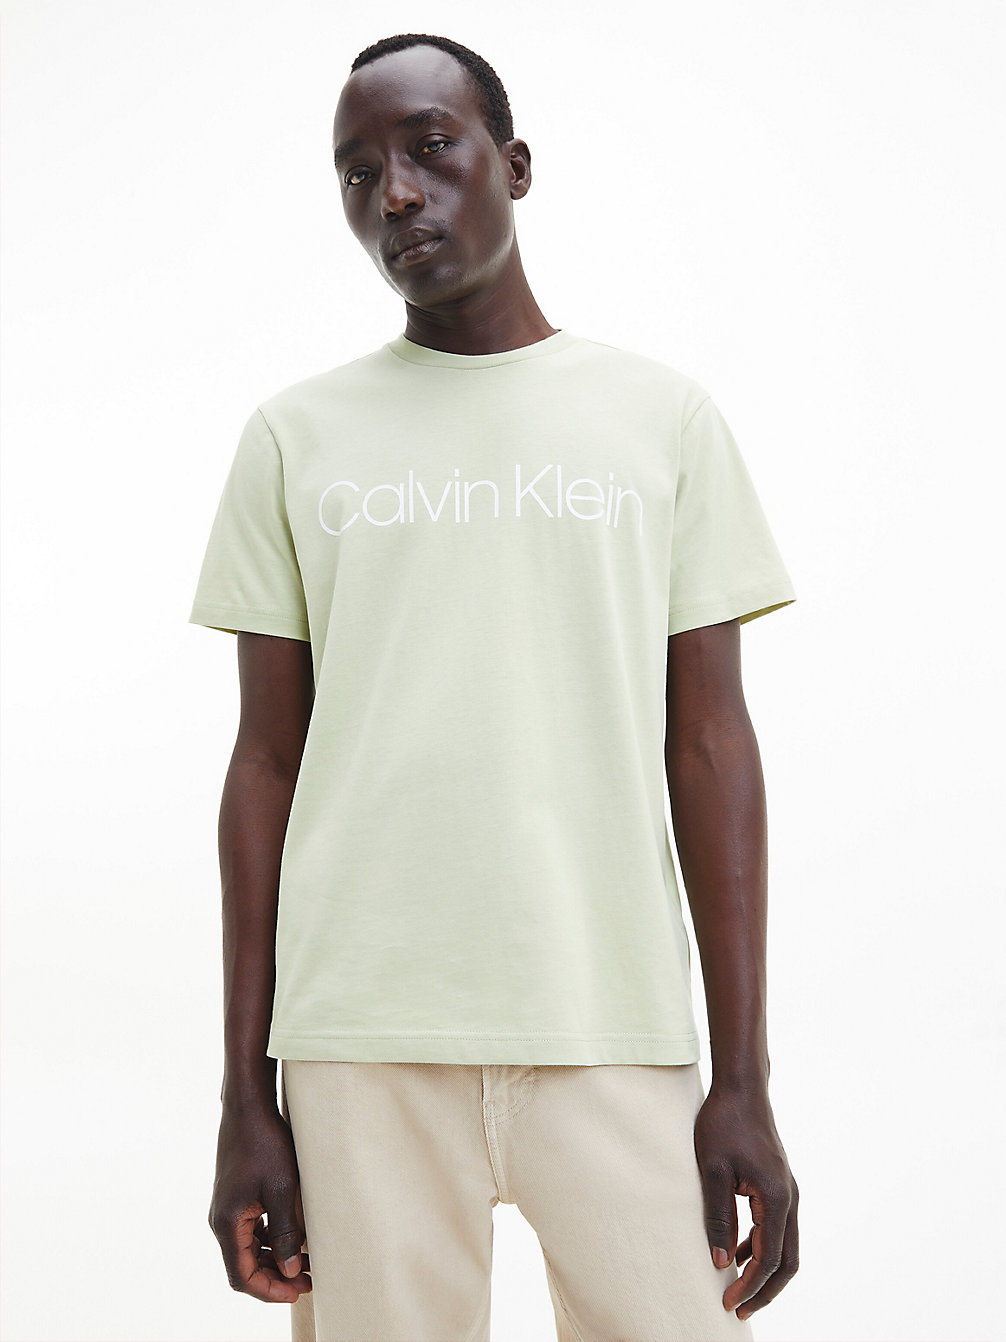 HERB TEA Organic Cotton Logo T-Shirt undefined men Calvin Klein